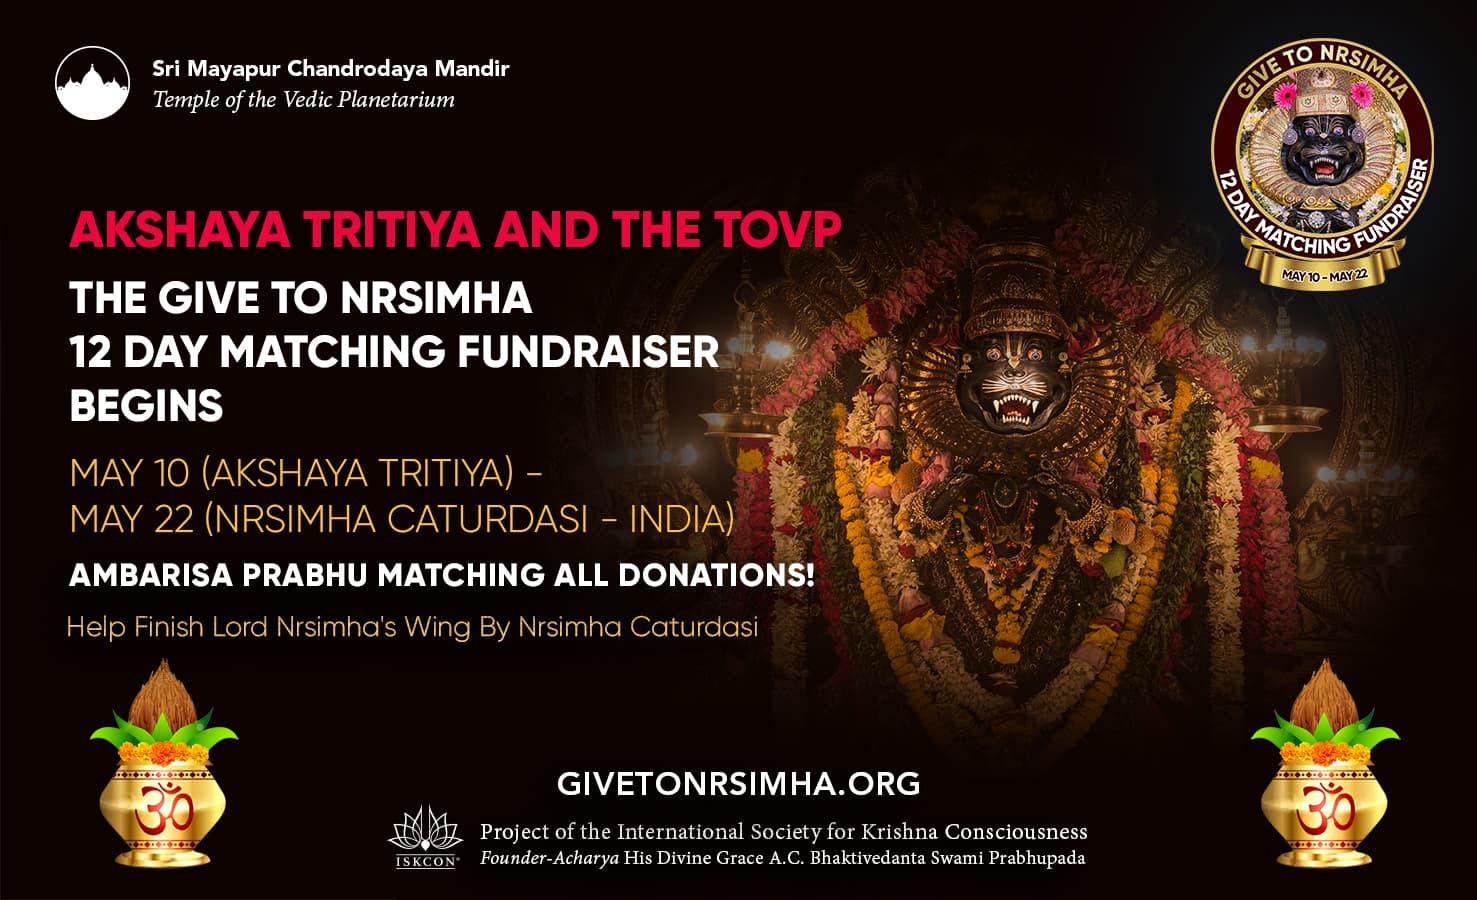 Akshaya Tritiya，5 月 10 日：TOVP 向 Nrsimha 捐赠 12 天配套募捐活动开始